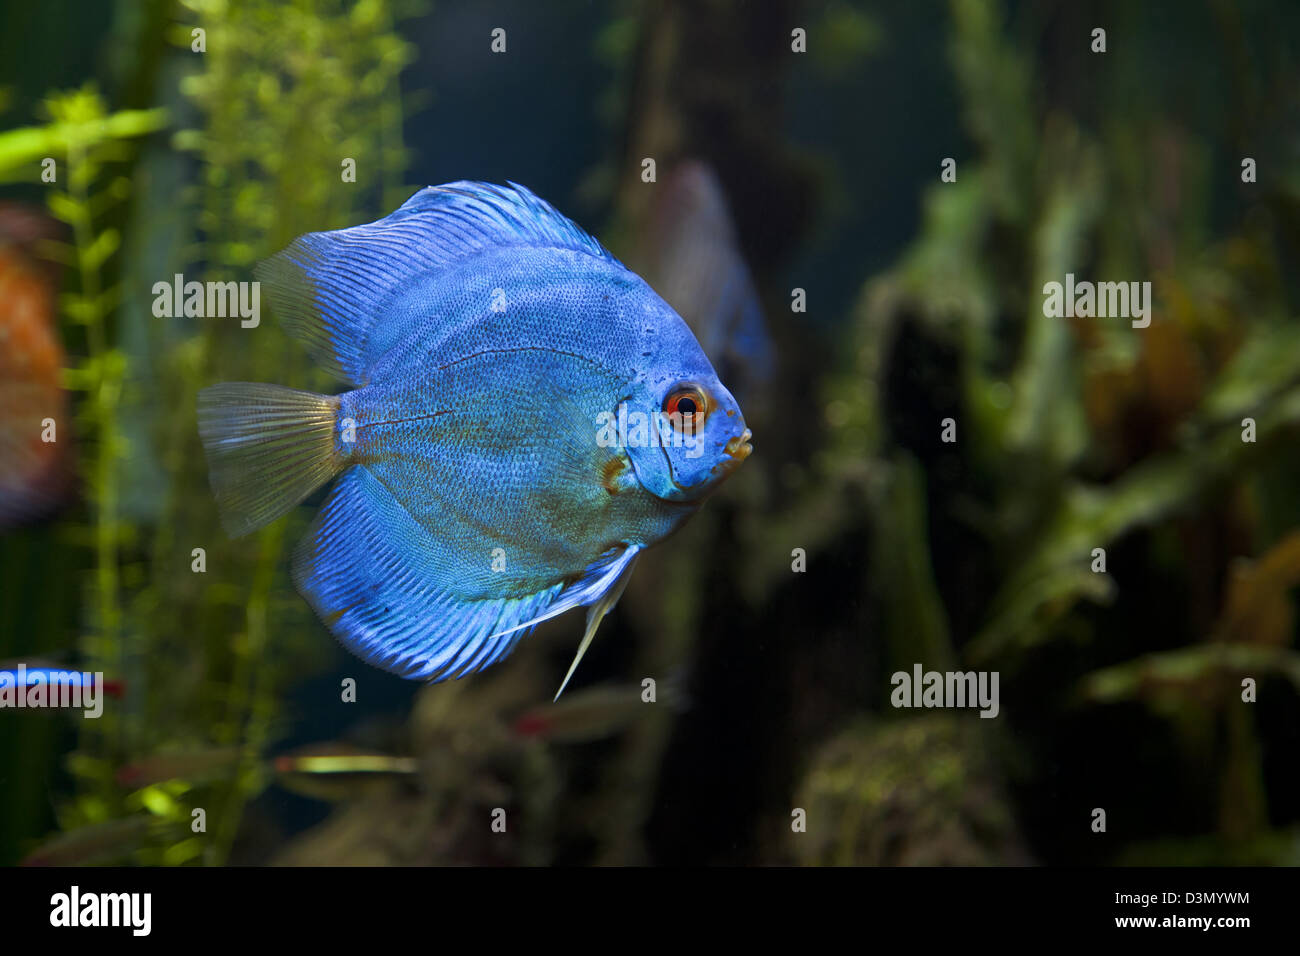 A close up shot of a beautiful Blue Diamond Discus Fish Stock Photo